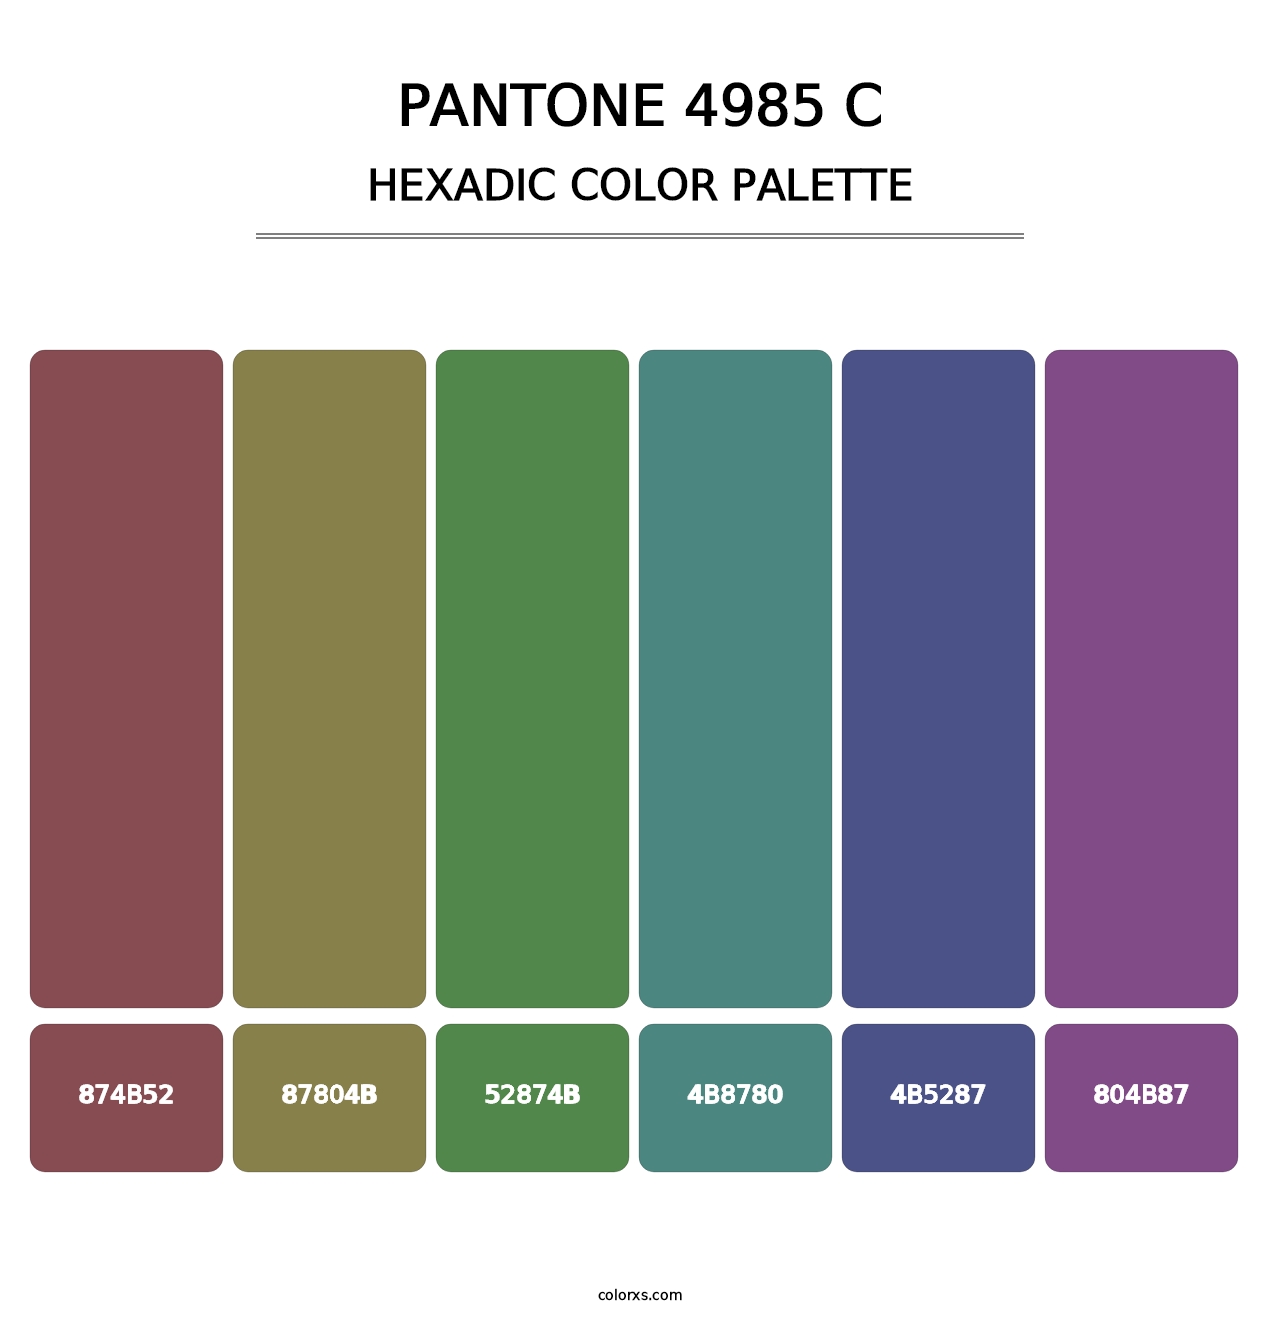 PANTONE 4985 C - Hexadic Color Palette